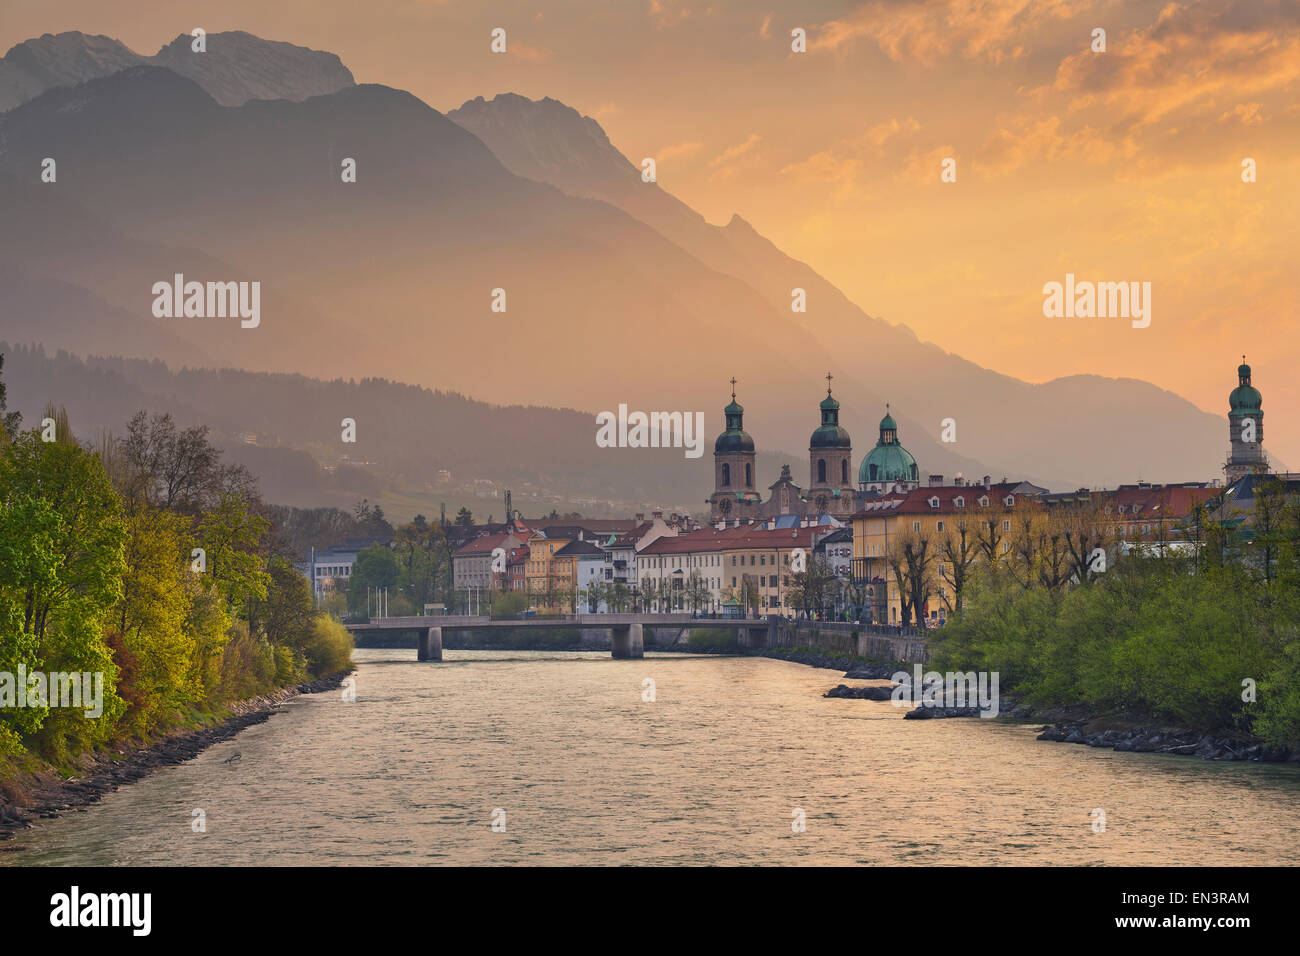 Innsbruck. Immagine di Innsbruck, Austria durante la drammatica sunrise. Foto Stock